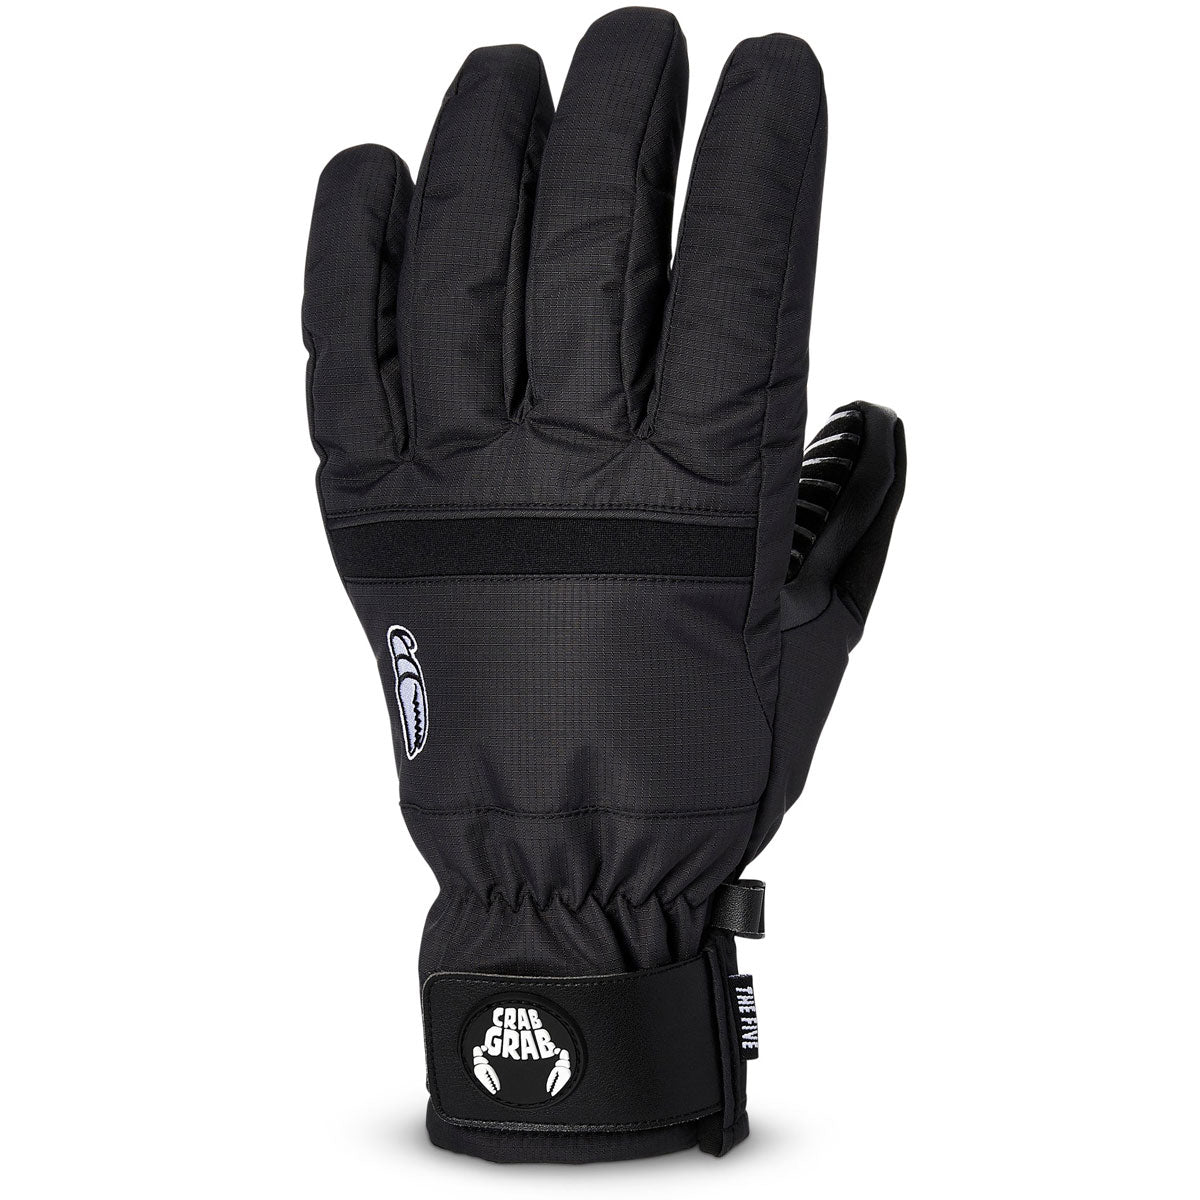 Crab Grab Five Snowboard Gloves - Black image 1